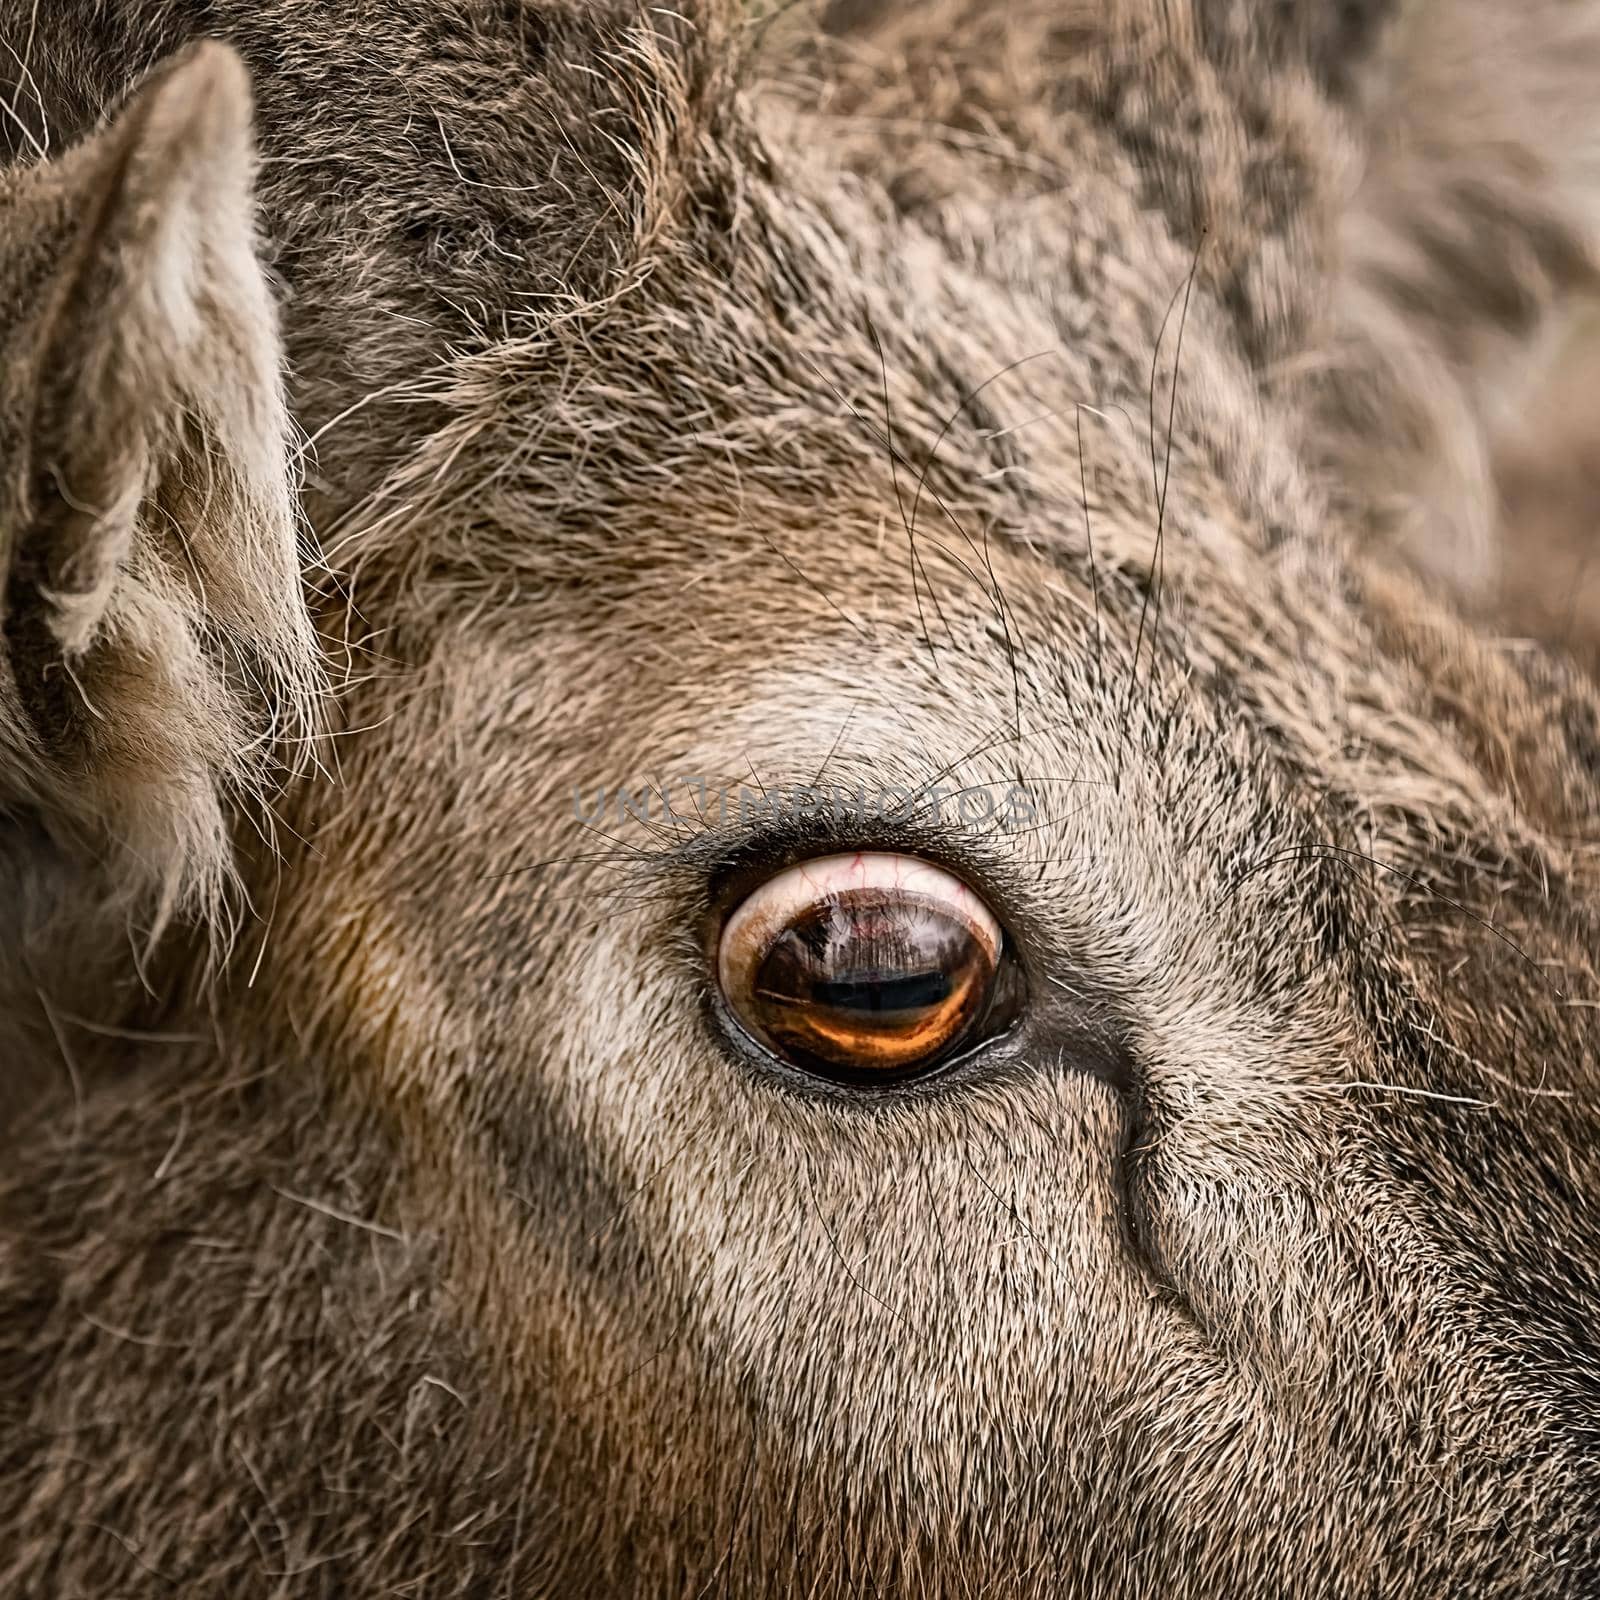 Close-up image of eye of a deer 